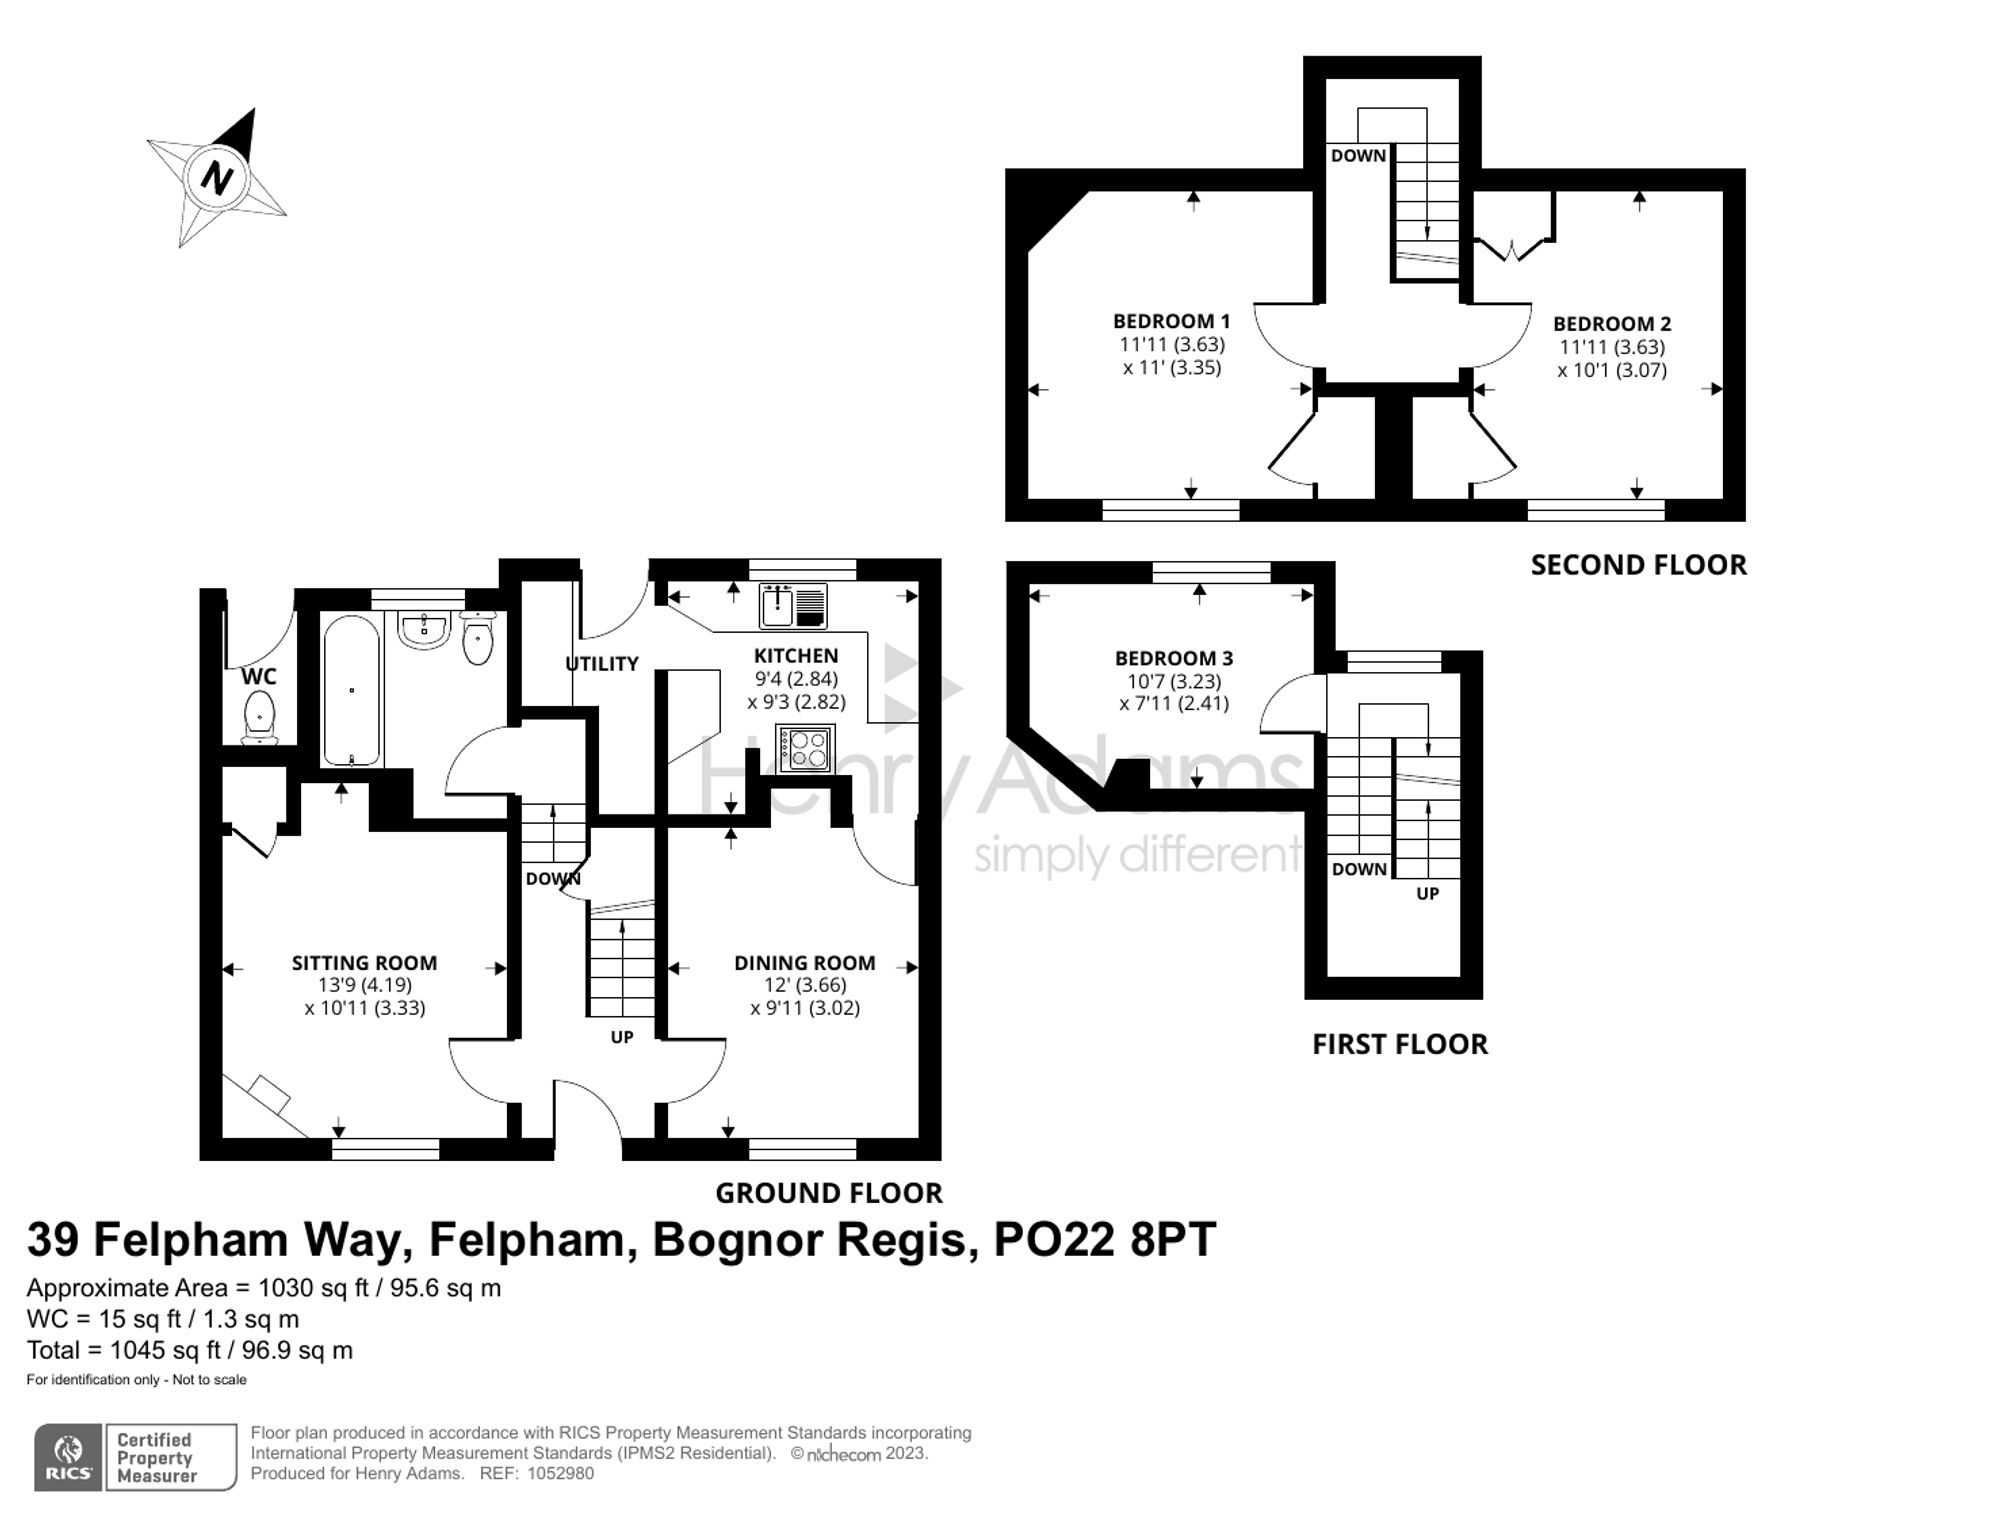 Felpham Way, Bognor Regis, PO22 floorplans